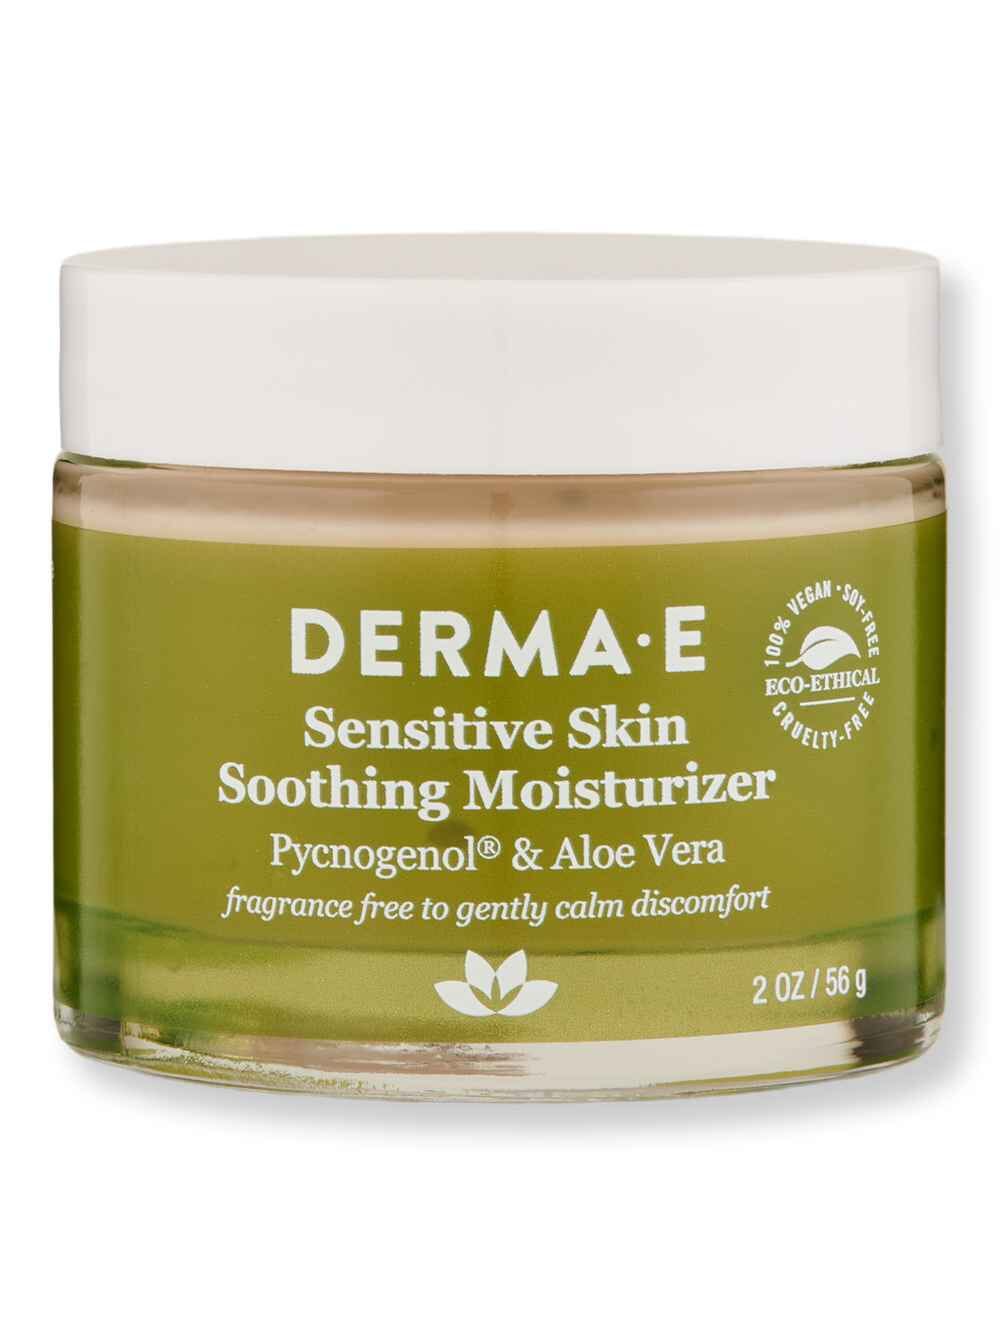 Derma E Derma E Sensitive Skin Moisturizing Cream 2 oz56 g Face Moisturizers 